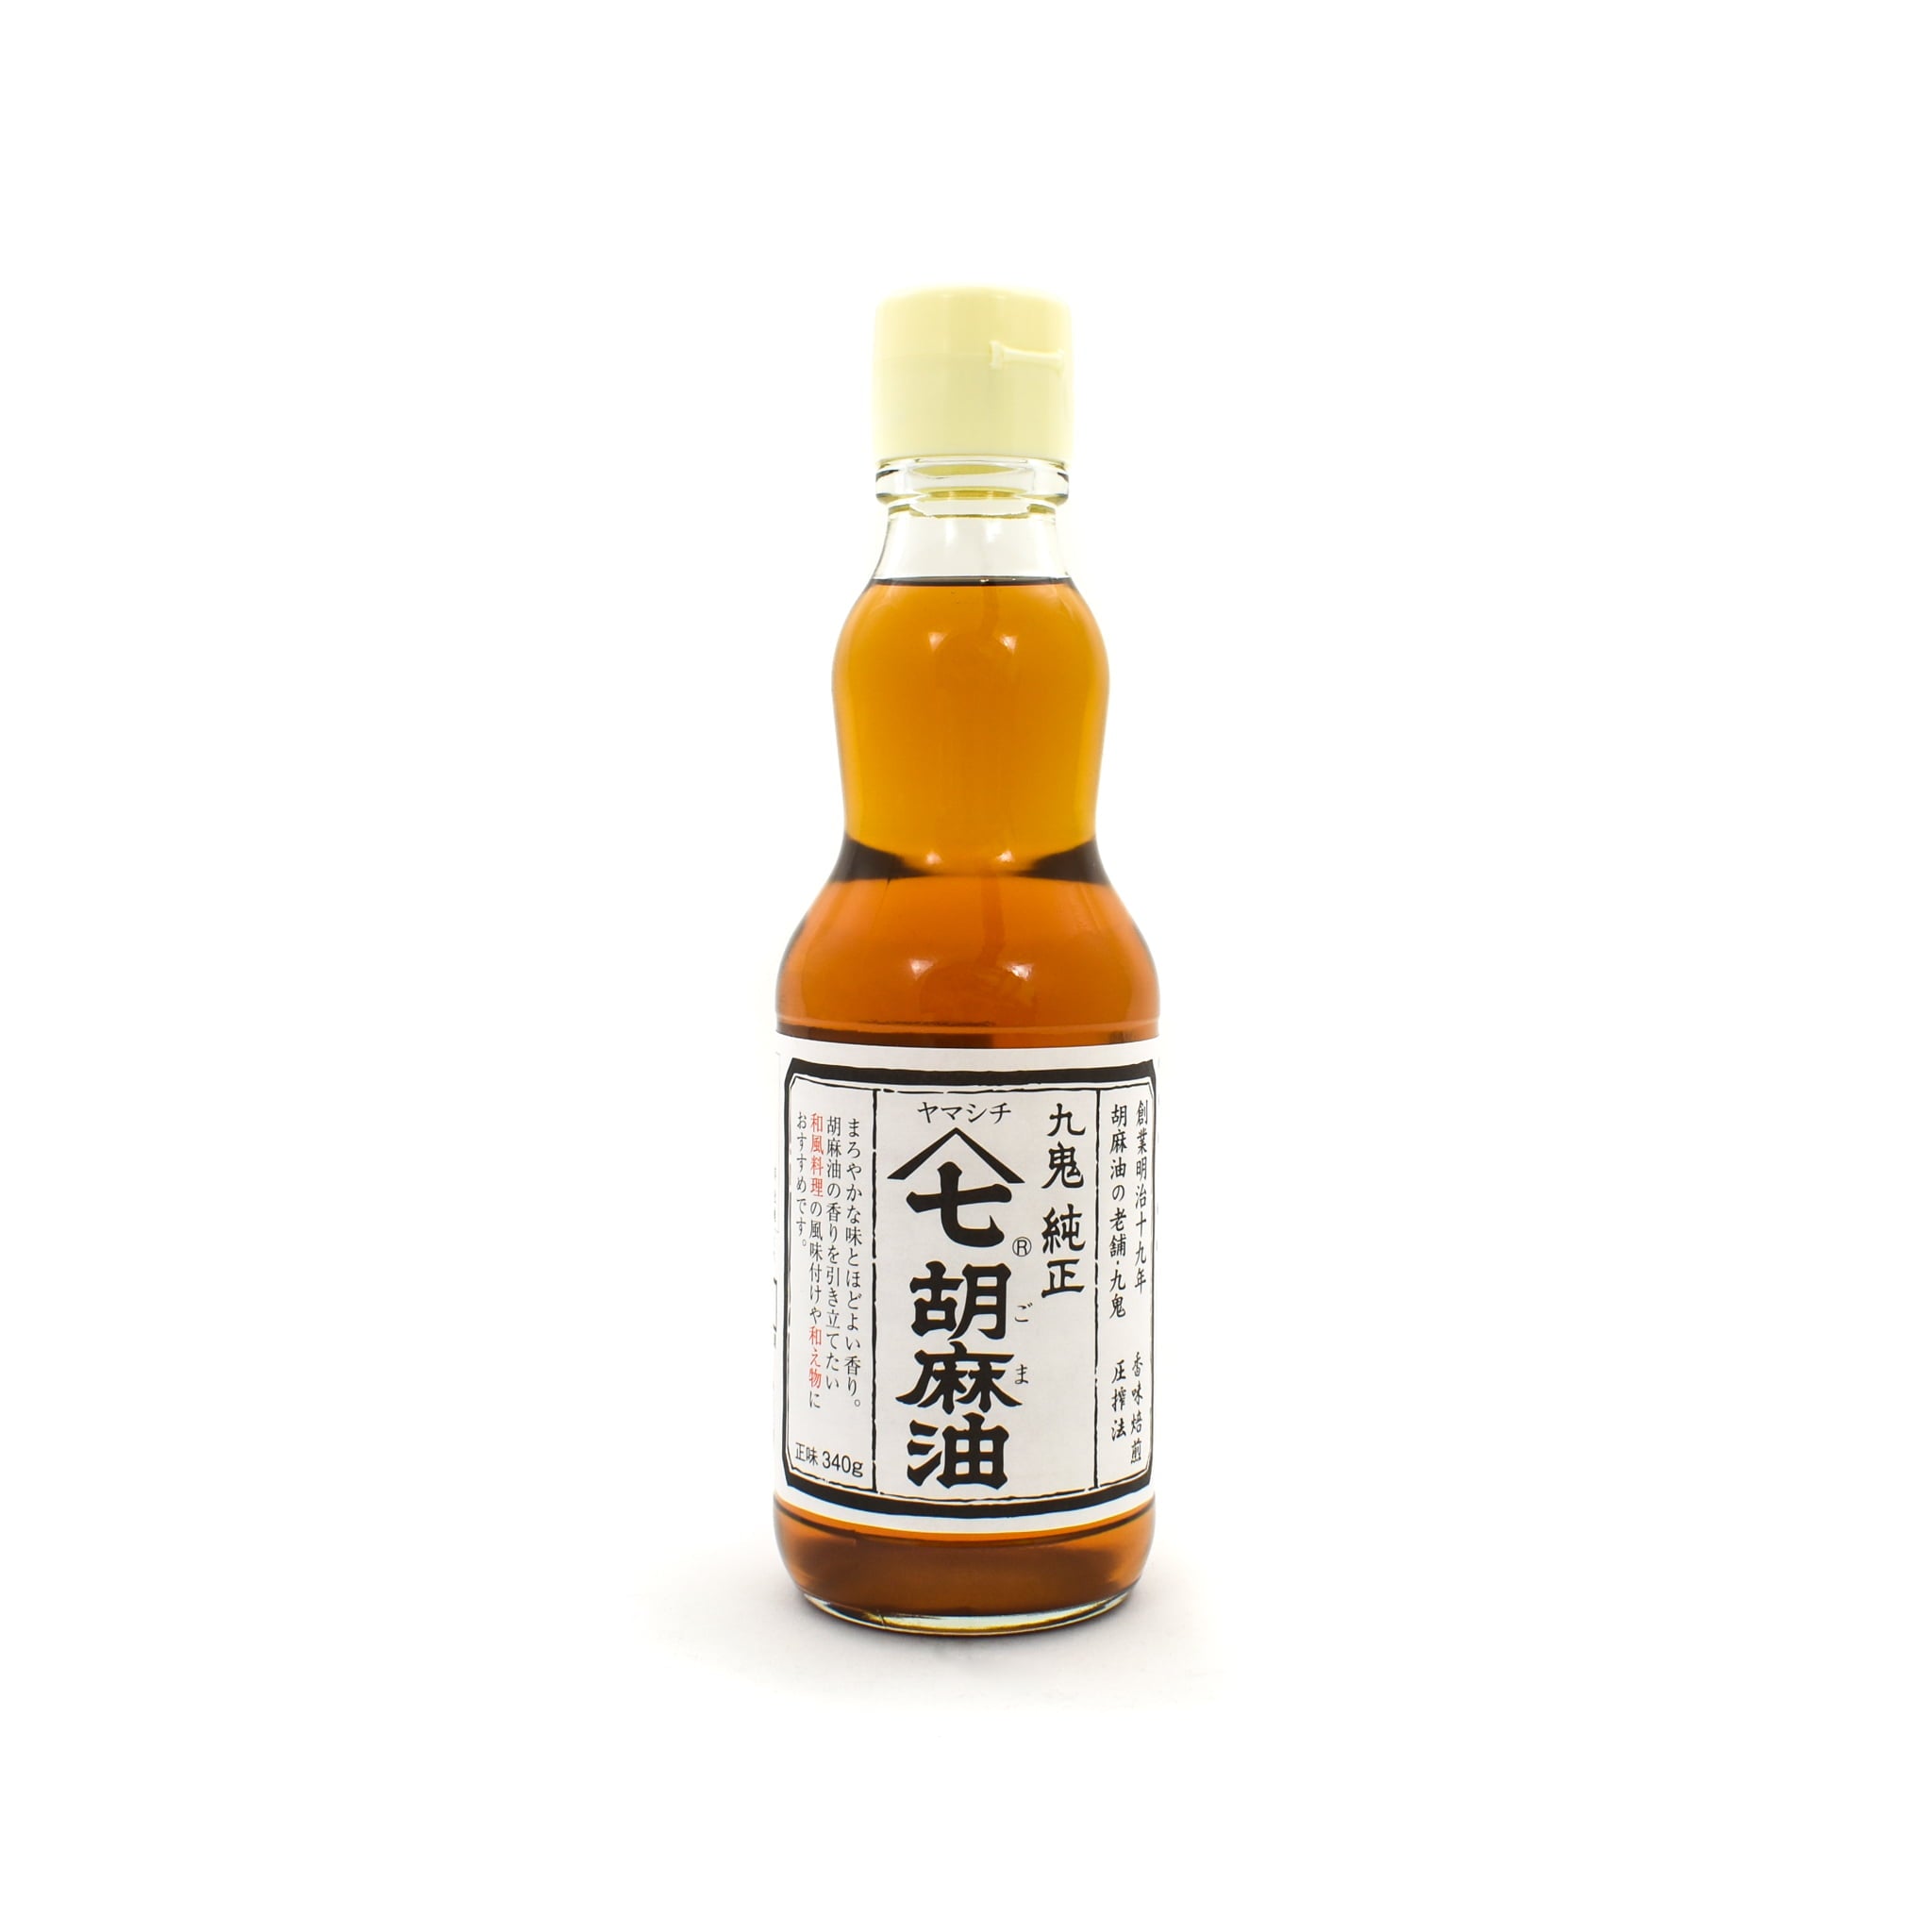 Kuki Sangyo Medium Intensity Sesame Oil 340g